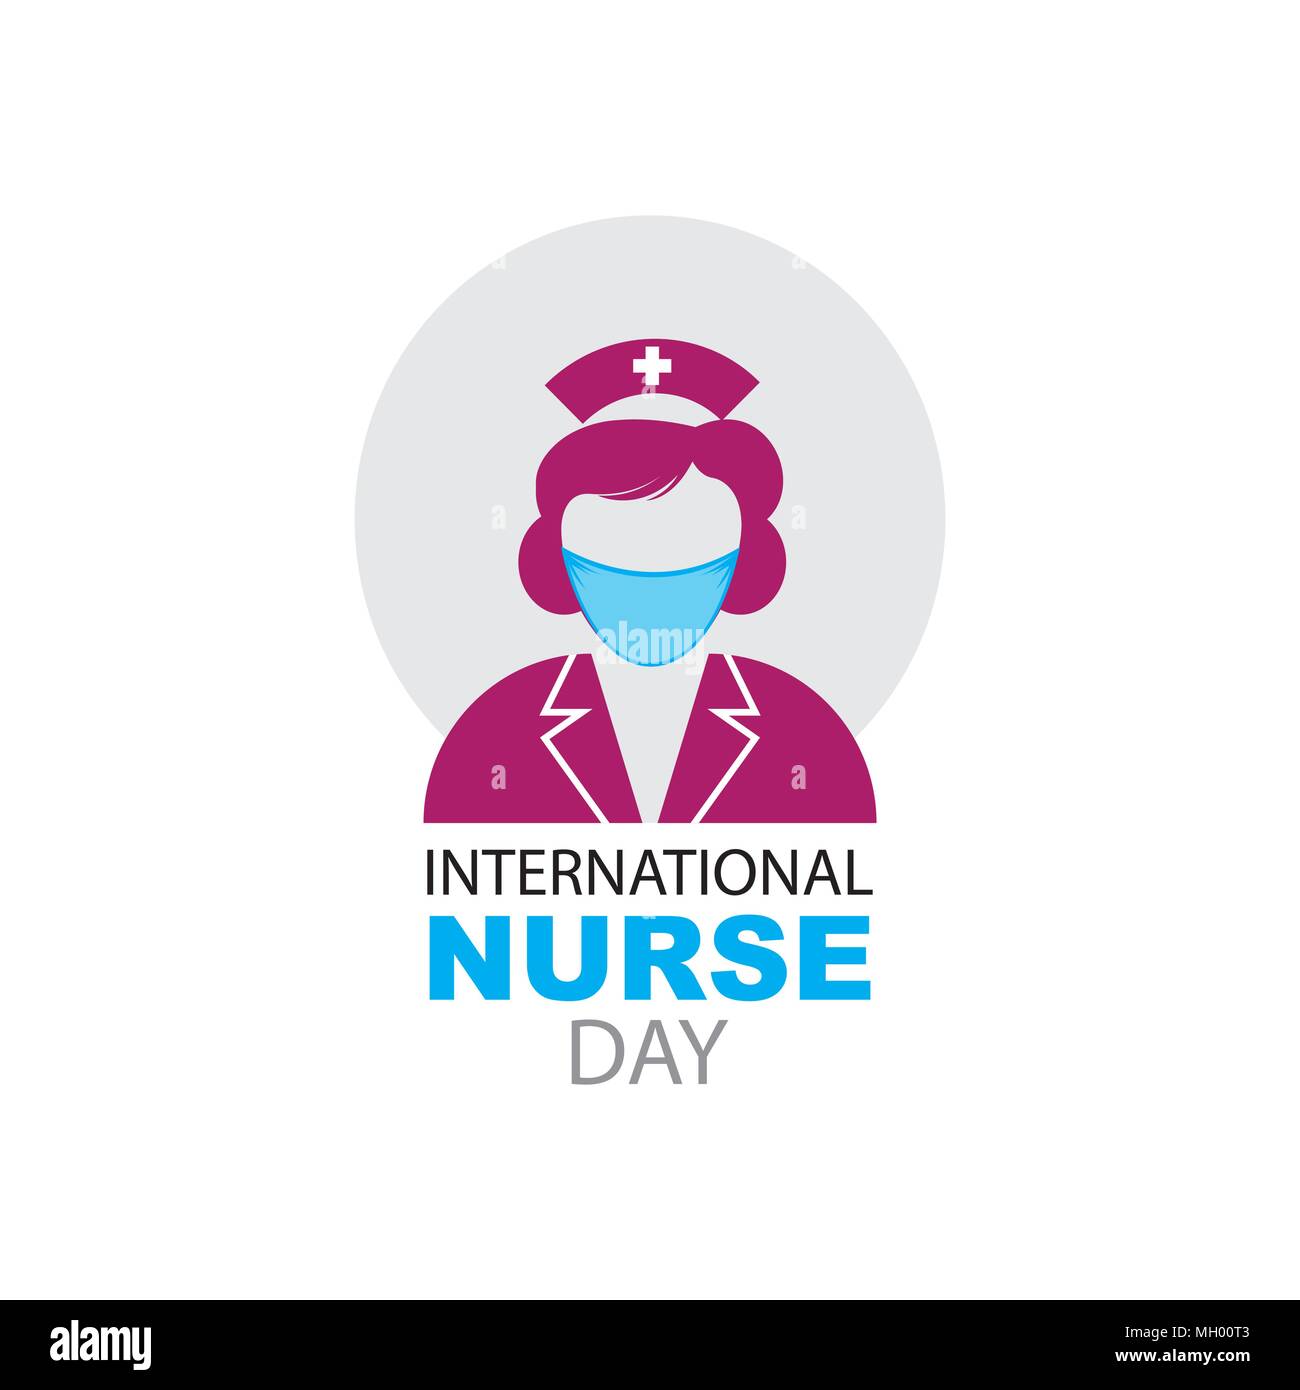 International Nurses Day, May 12. Vector illustration of happy nurse day. vector image. Stock Vector